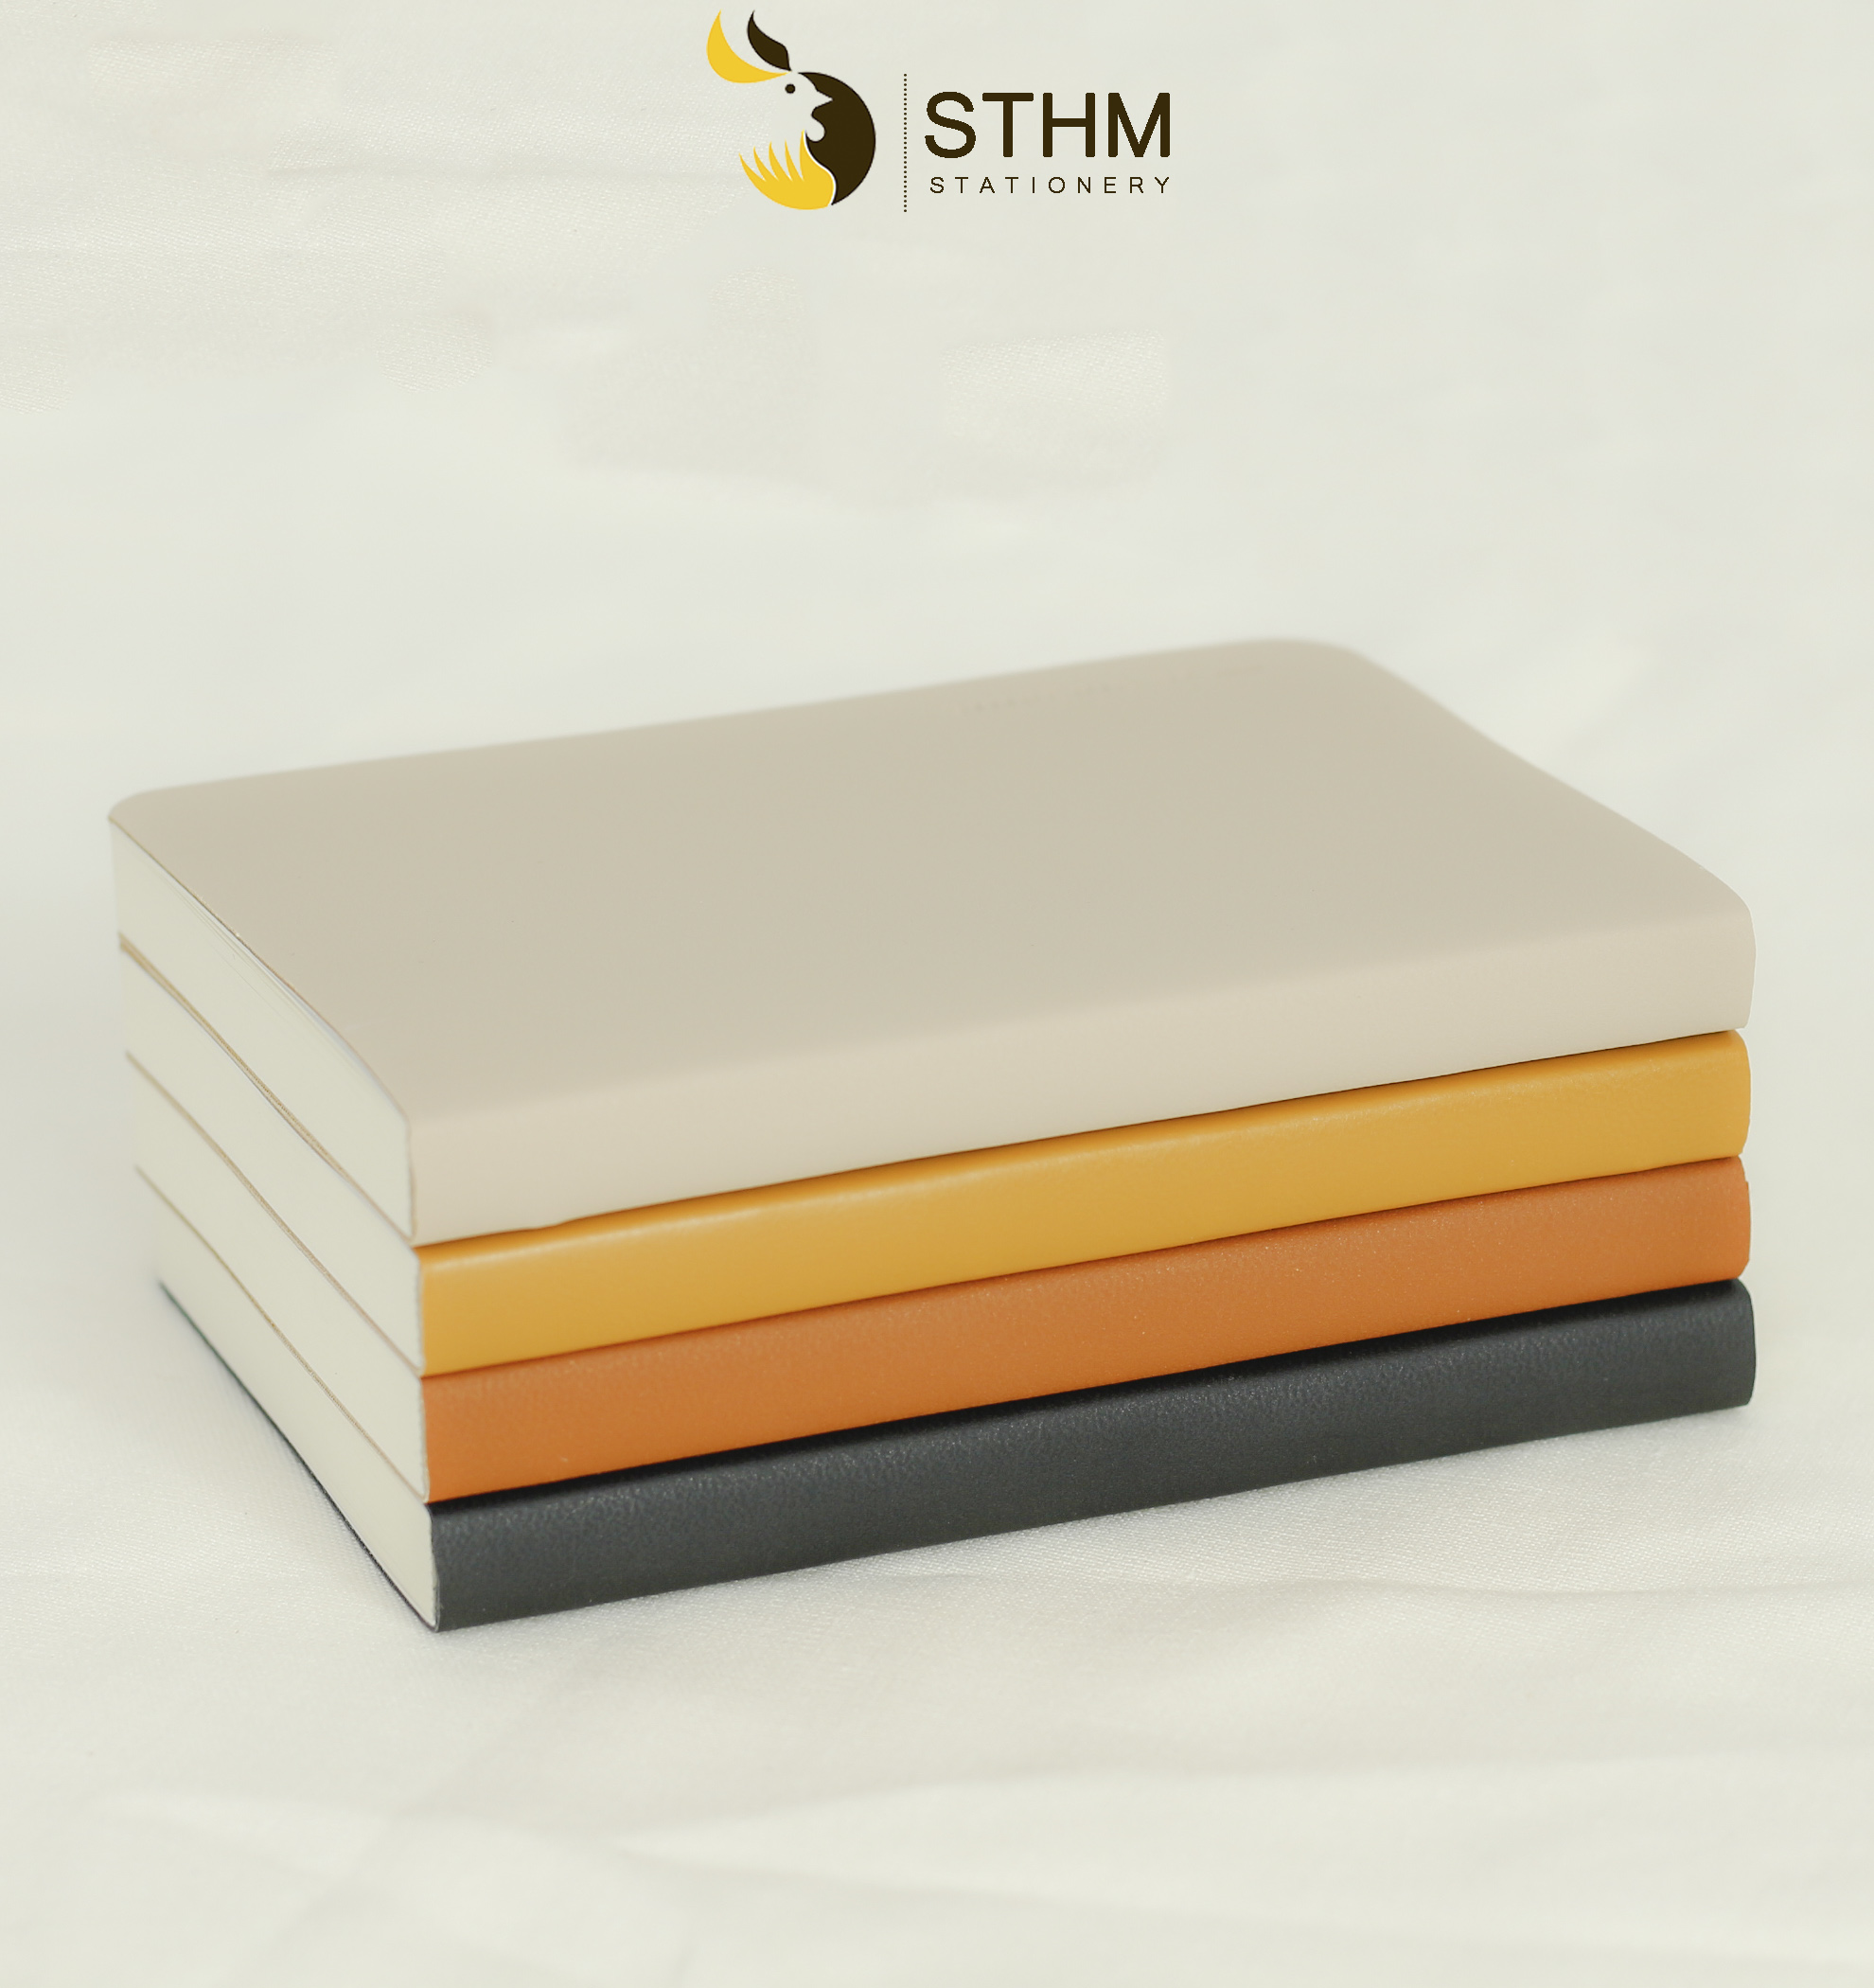 SIMPERIE S2 Mini - 100x140mm - Ruột kem trơn 100gsm - 160 trang - STHM stationery